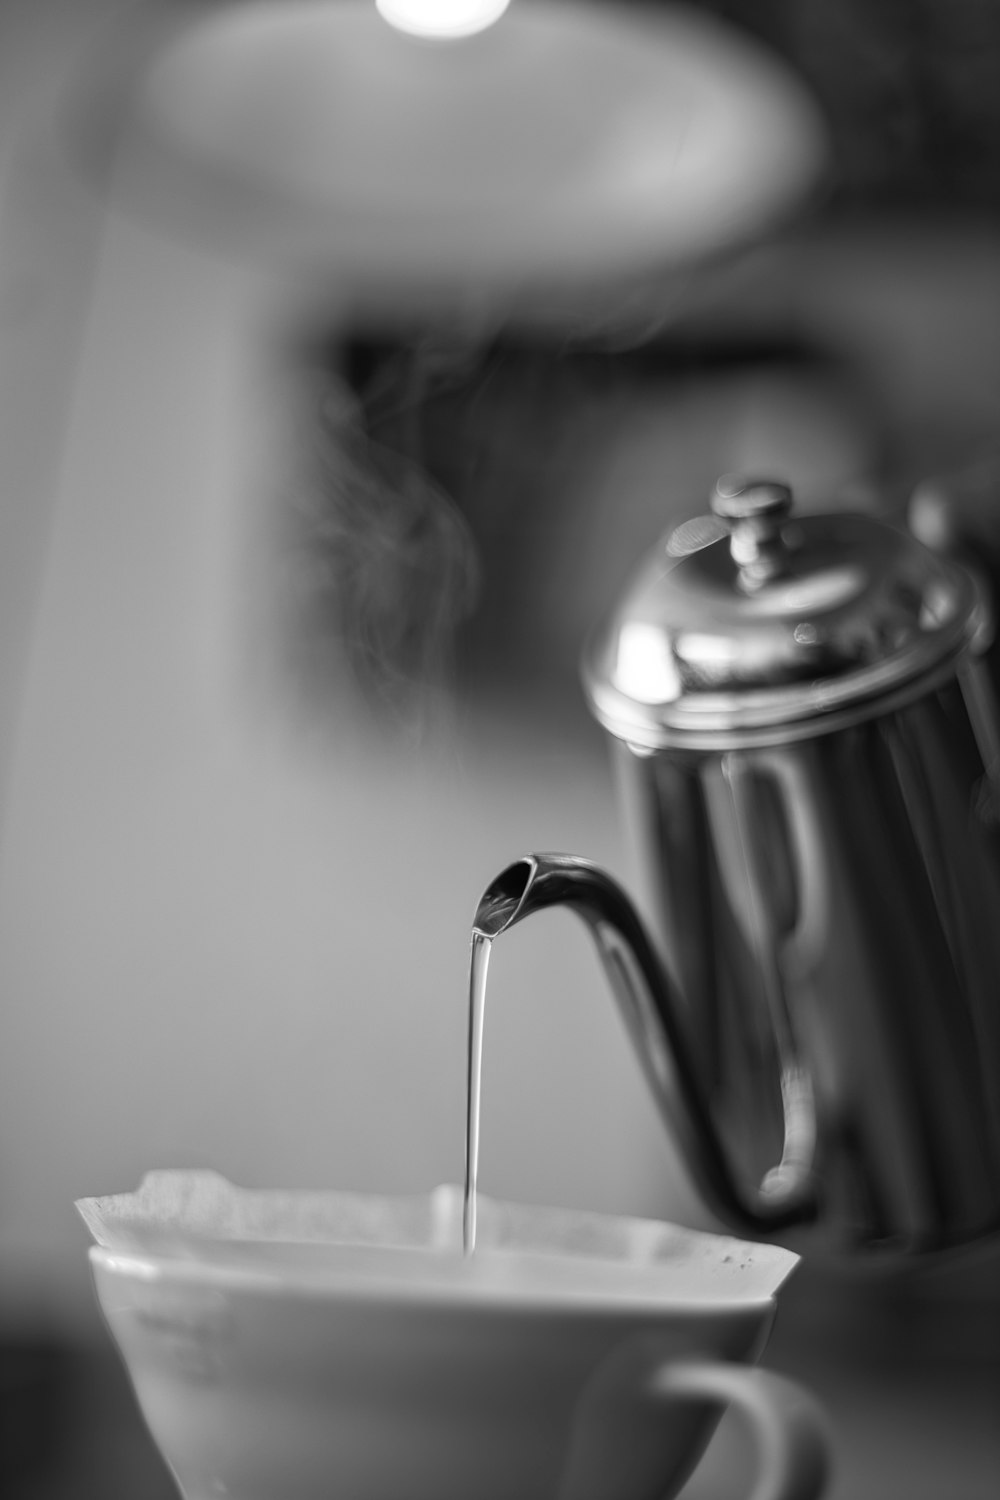 stainless steel kettle on sink